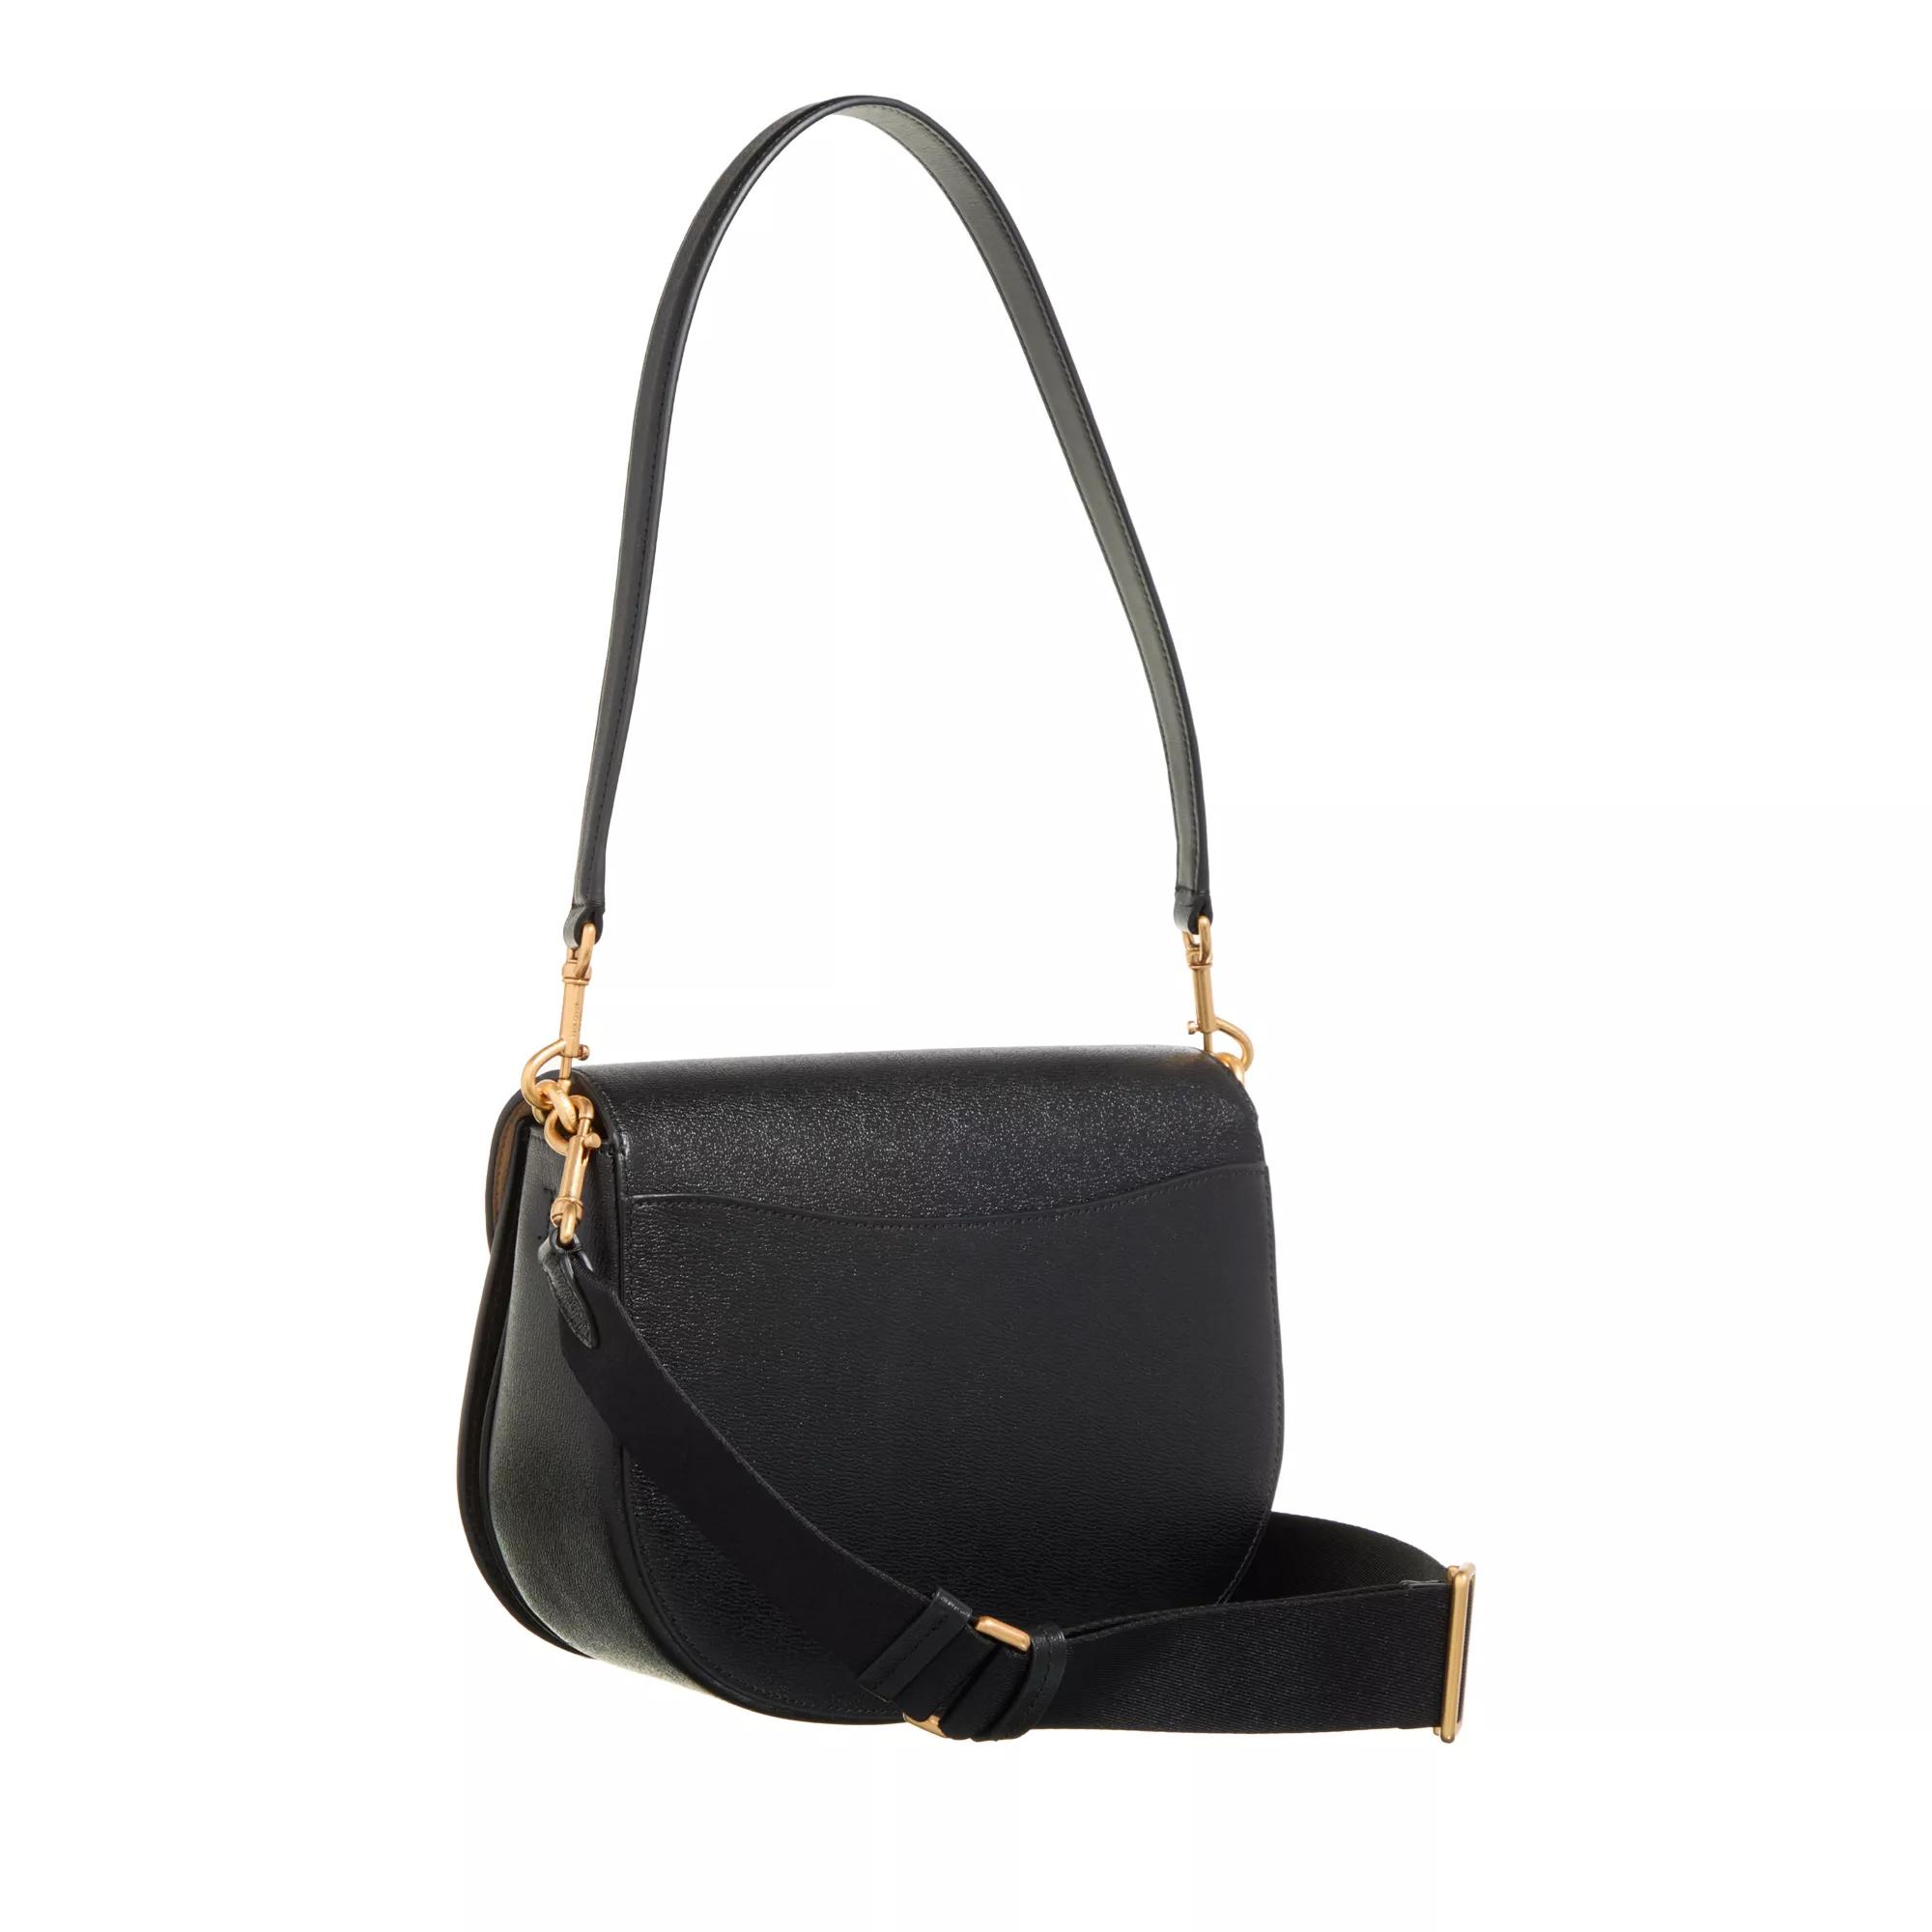 kate spade new york Crossbody bags Katy Textured Leather Convertible Saddle Bag in zwart